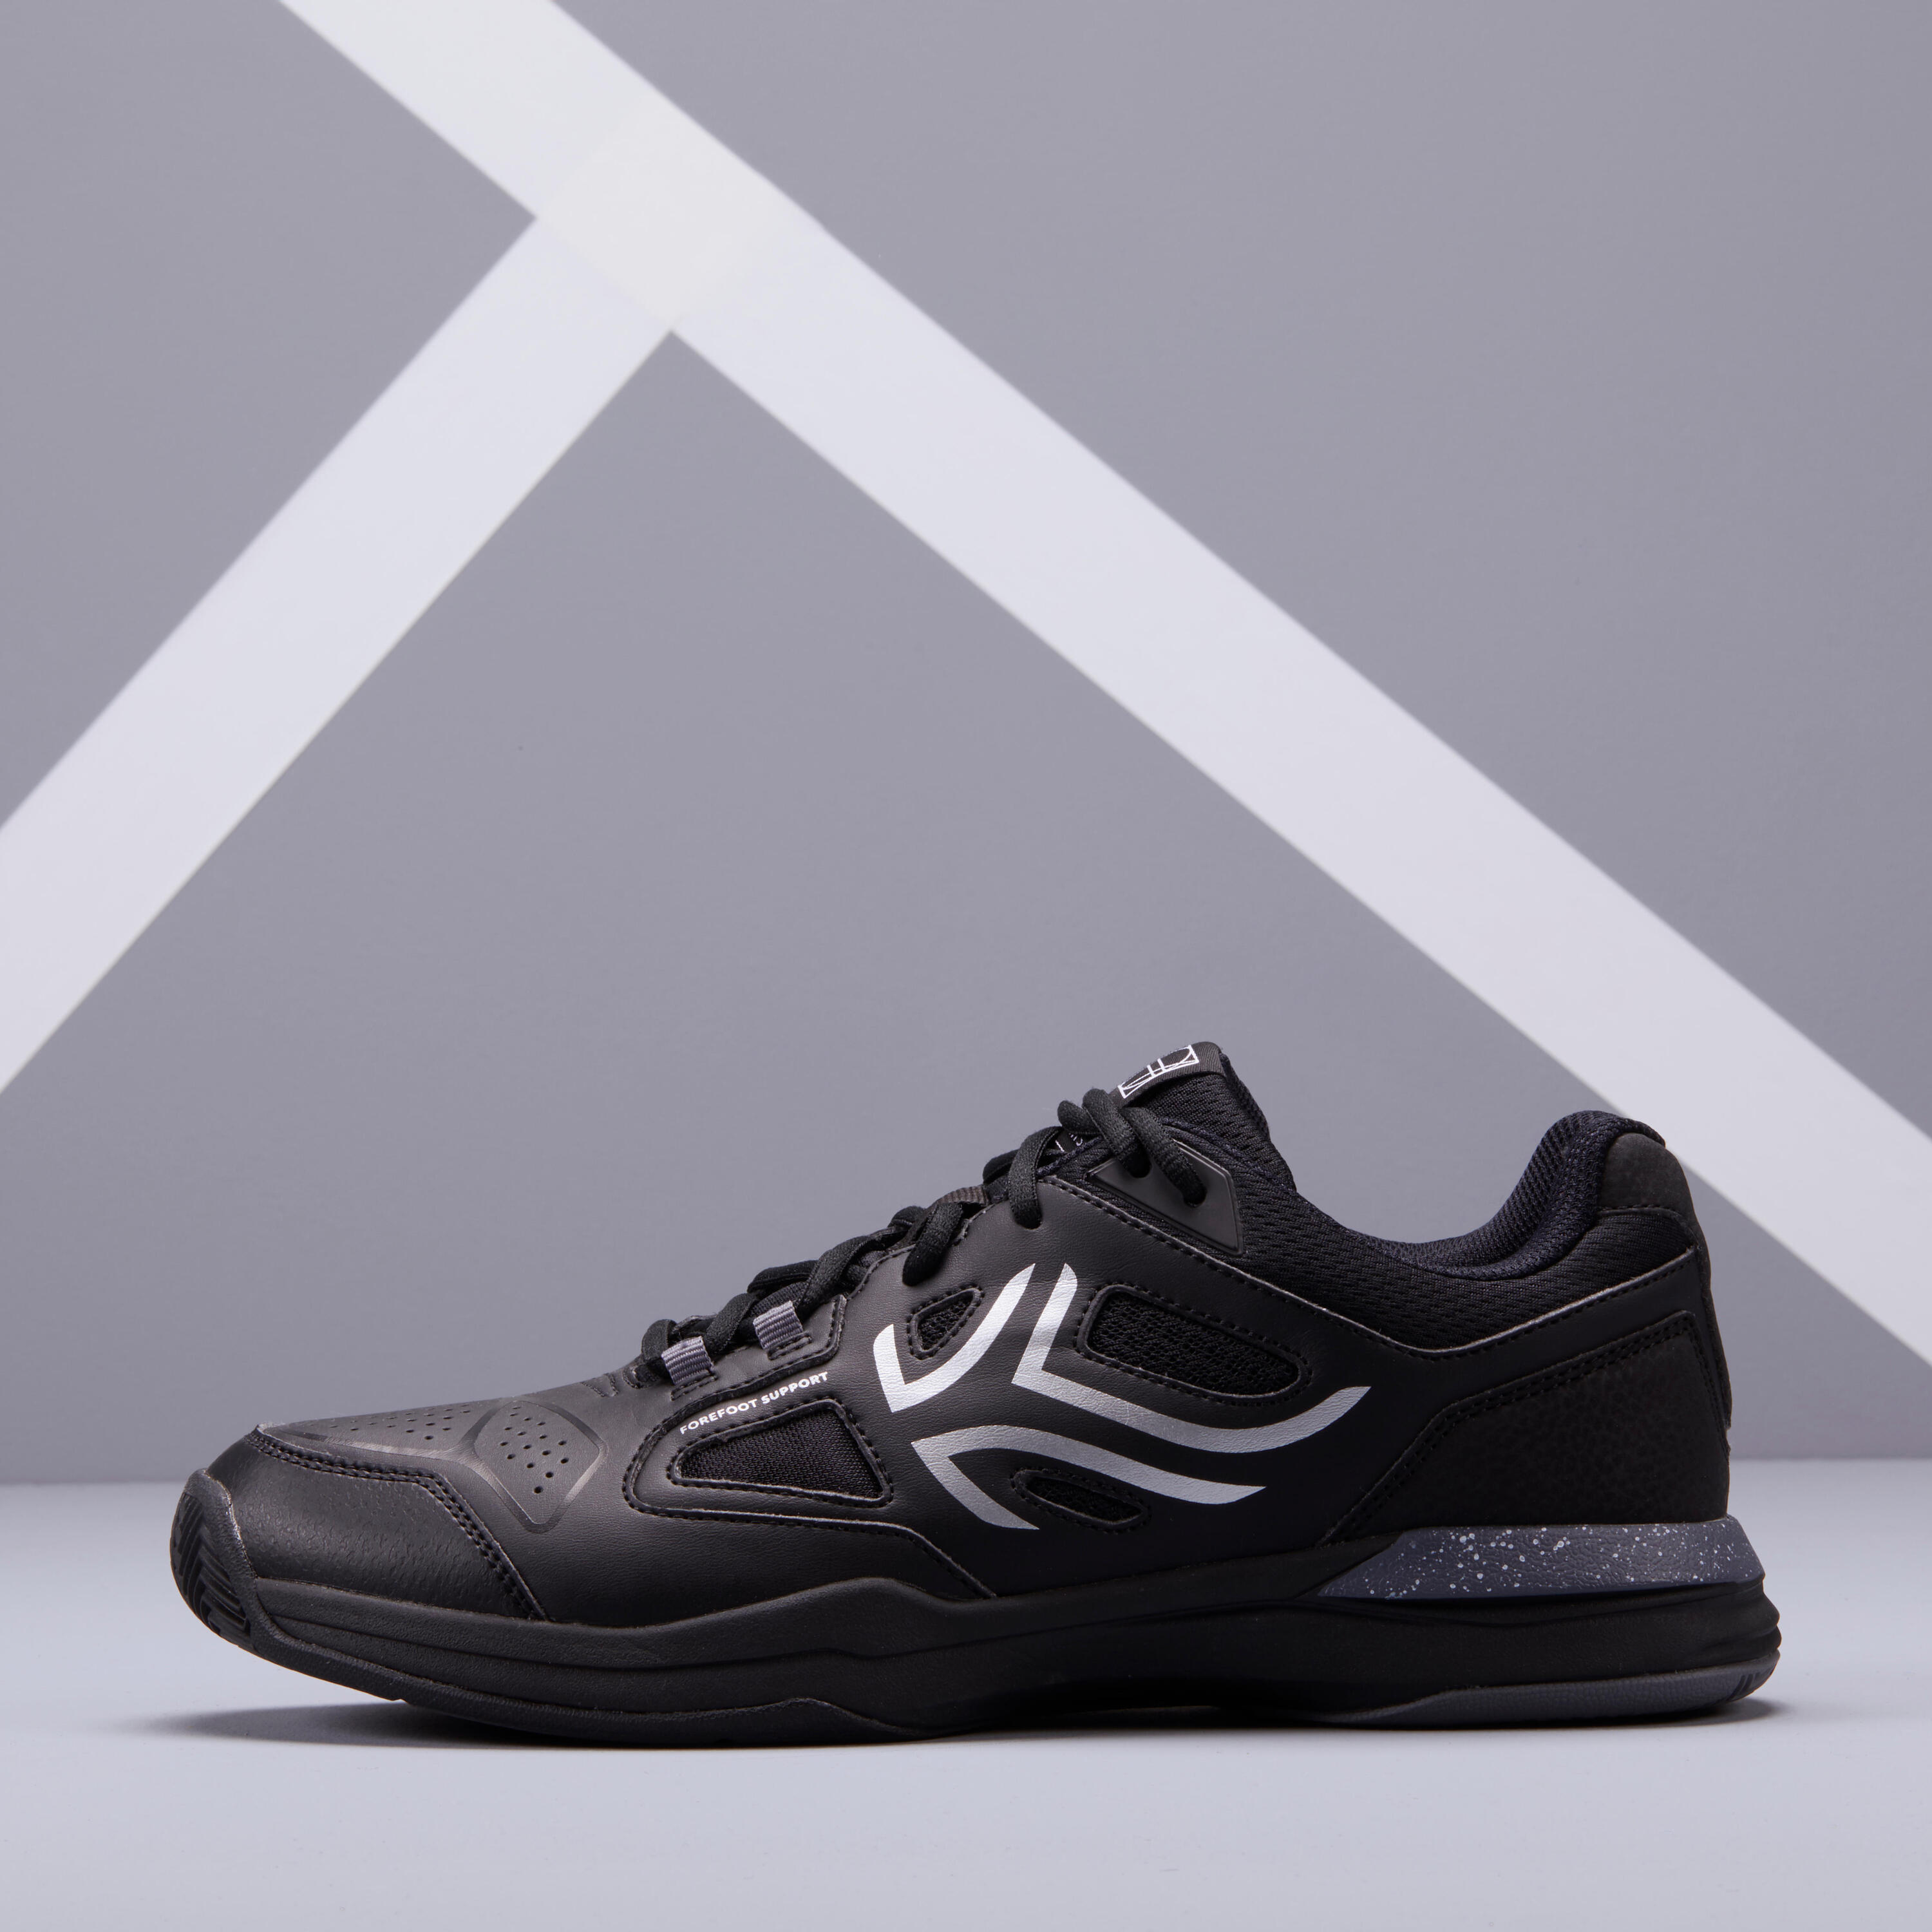 Men's Clay Court Tennis Shoes TS 500 - Black/Grey 3/8